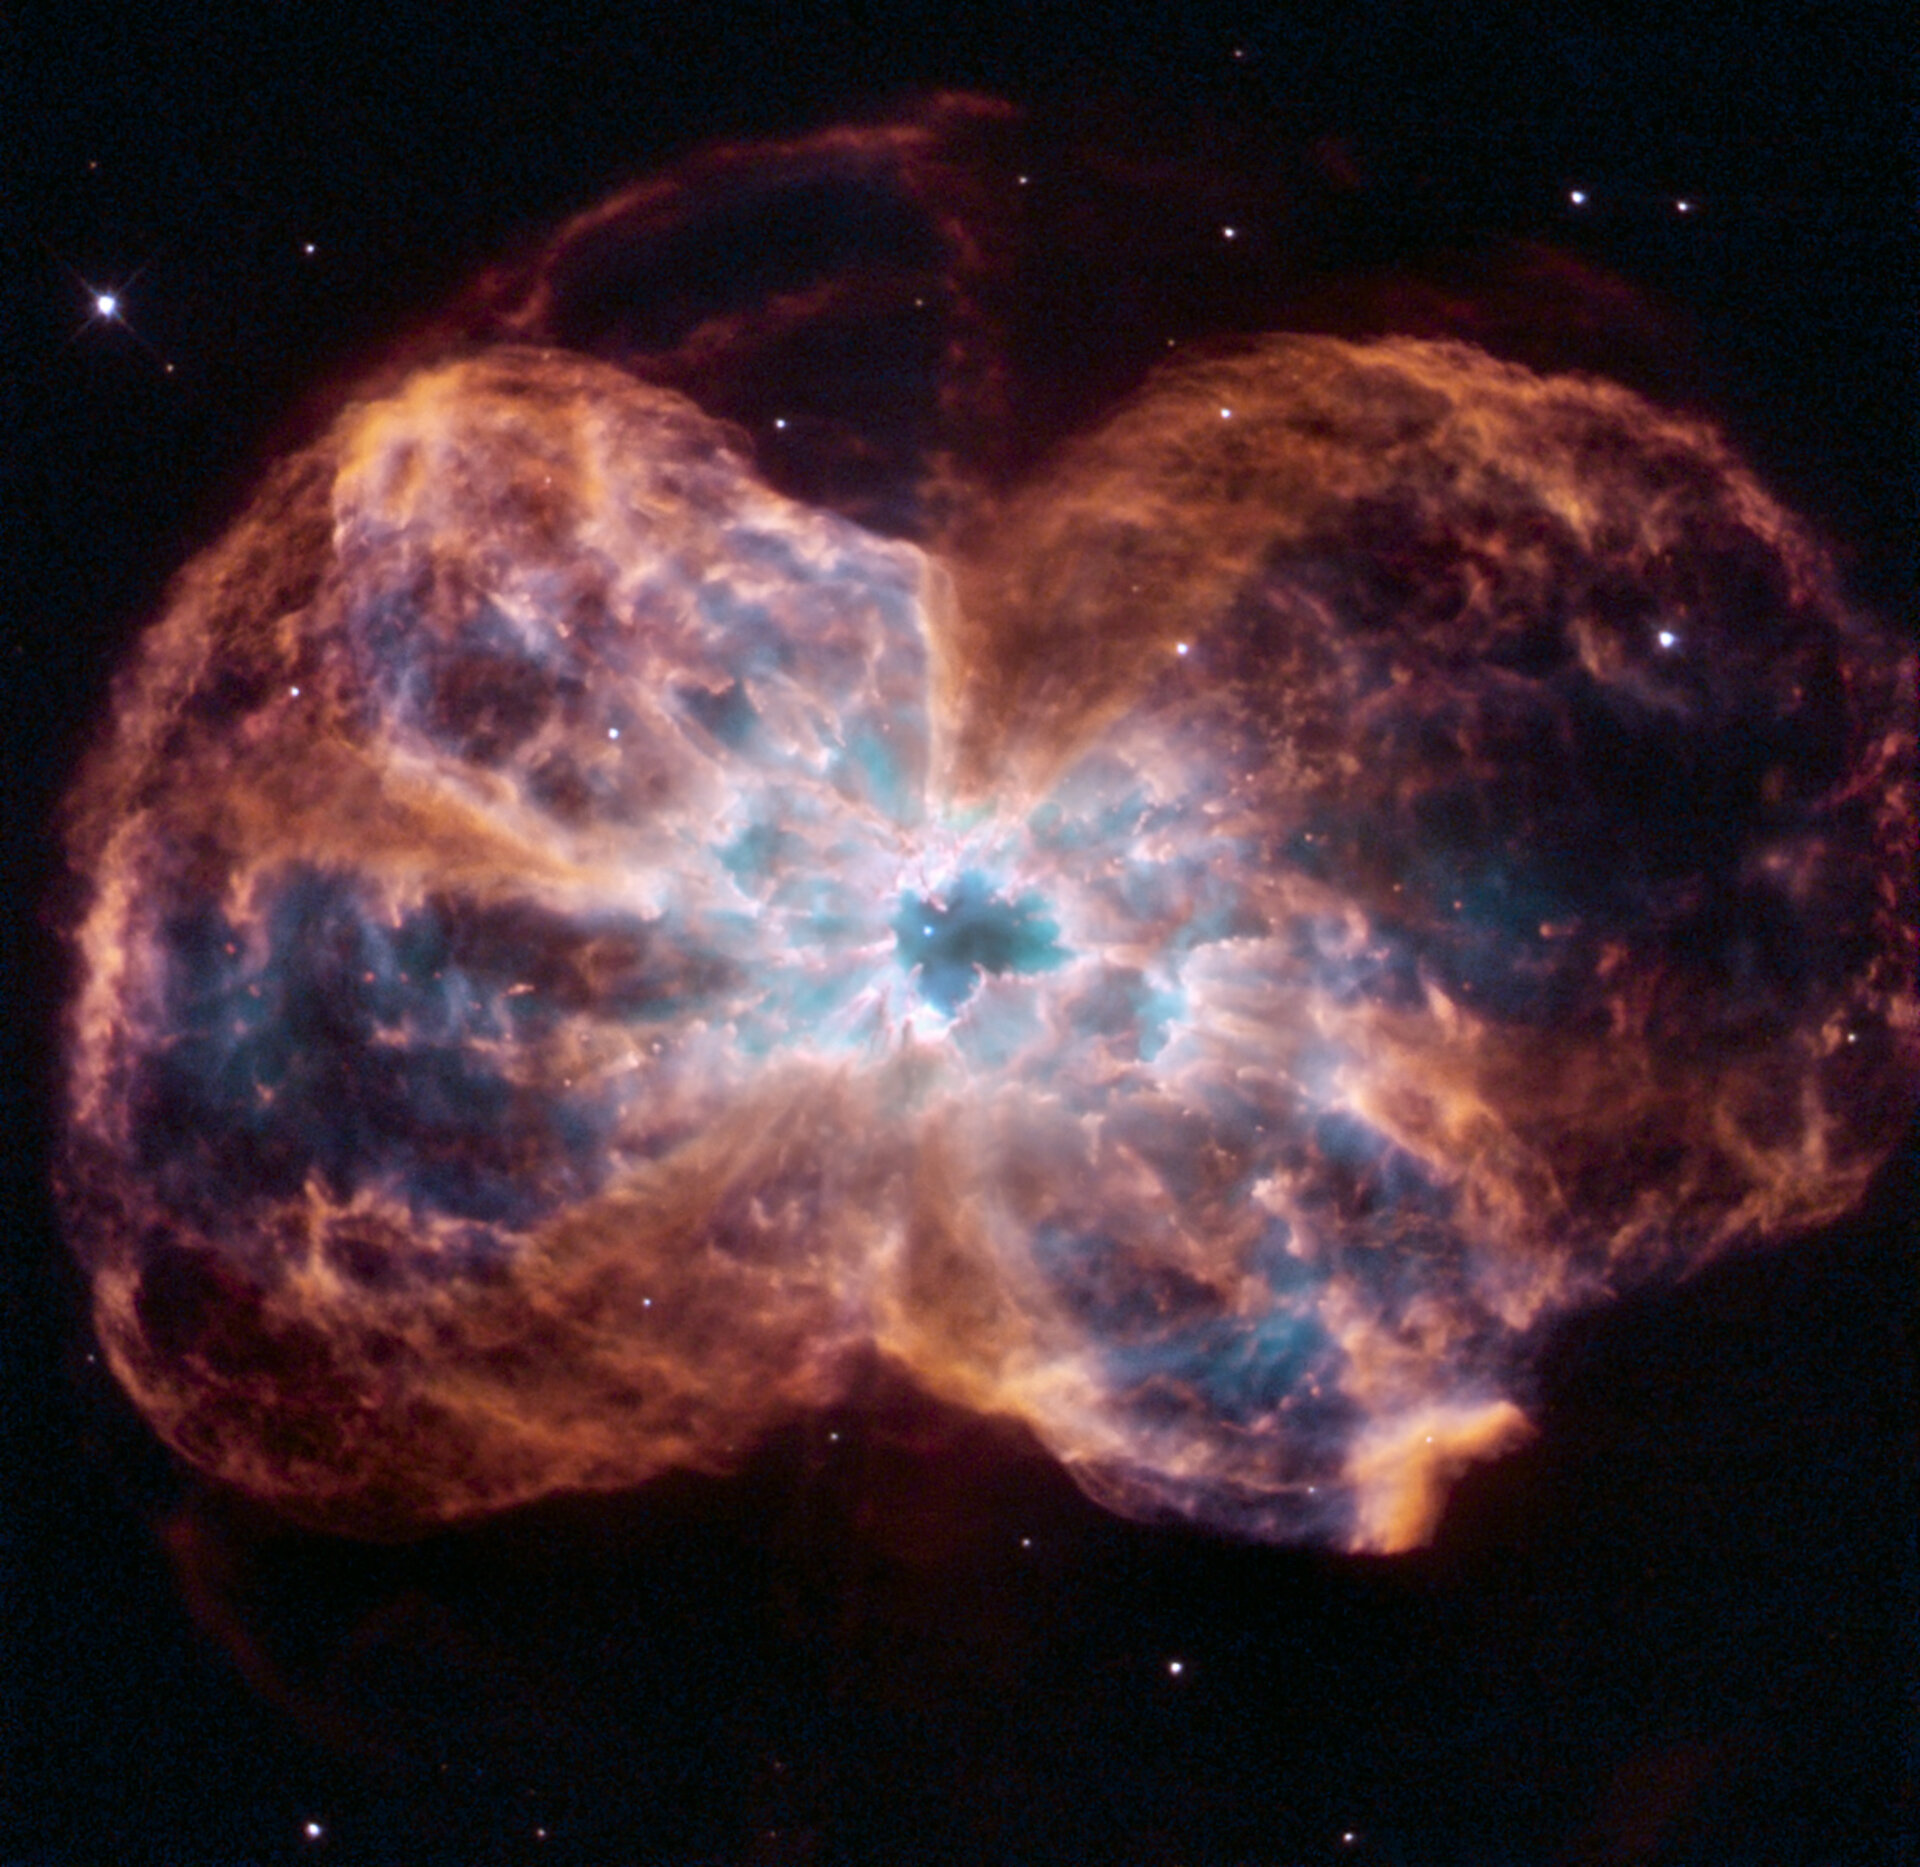 Hubble's view of planetary nebula NGC 2440